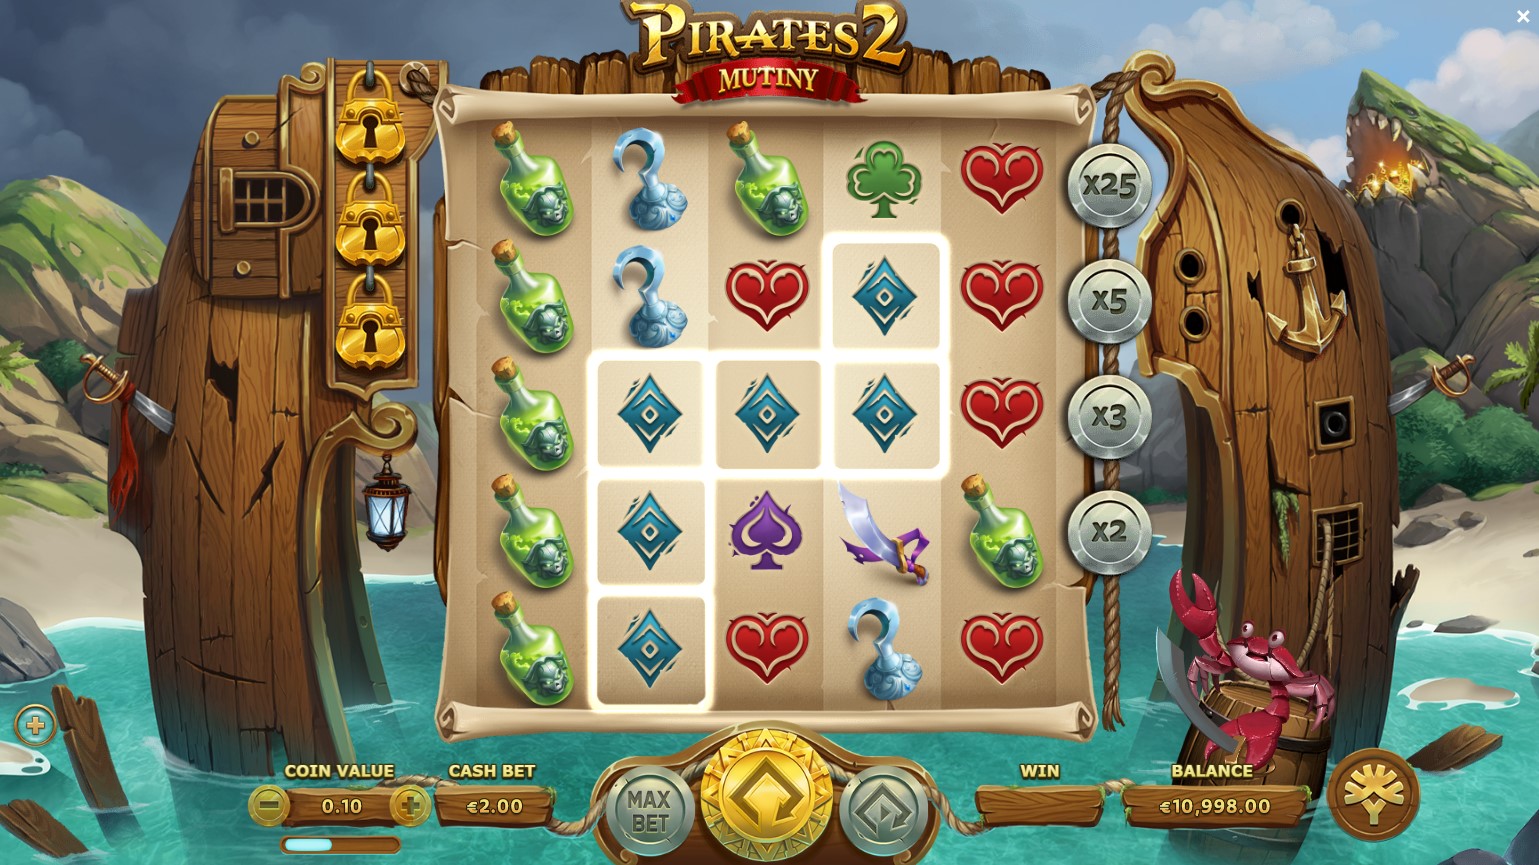 Pirates 2 Mutiny 1 Yggdrasil